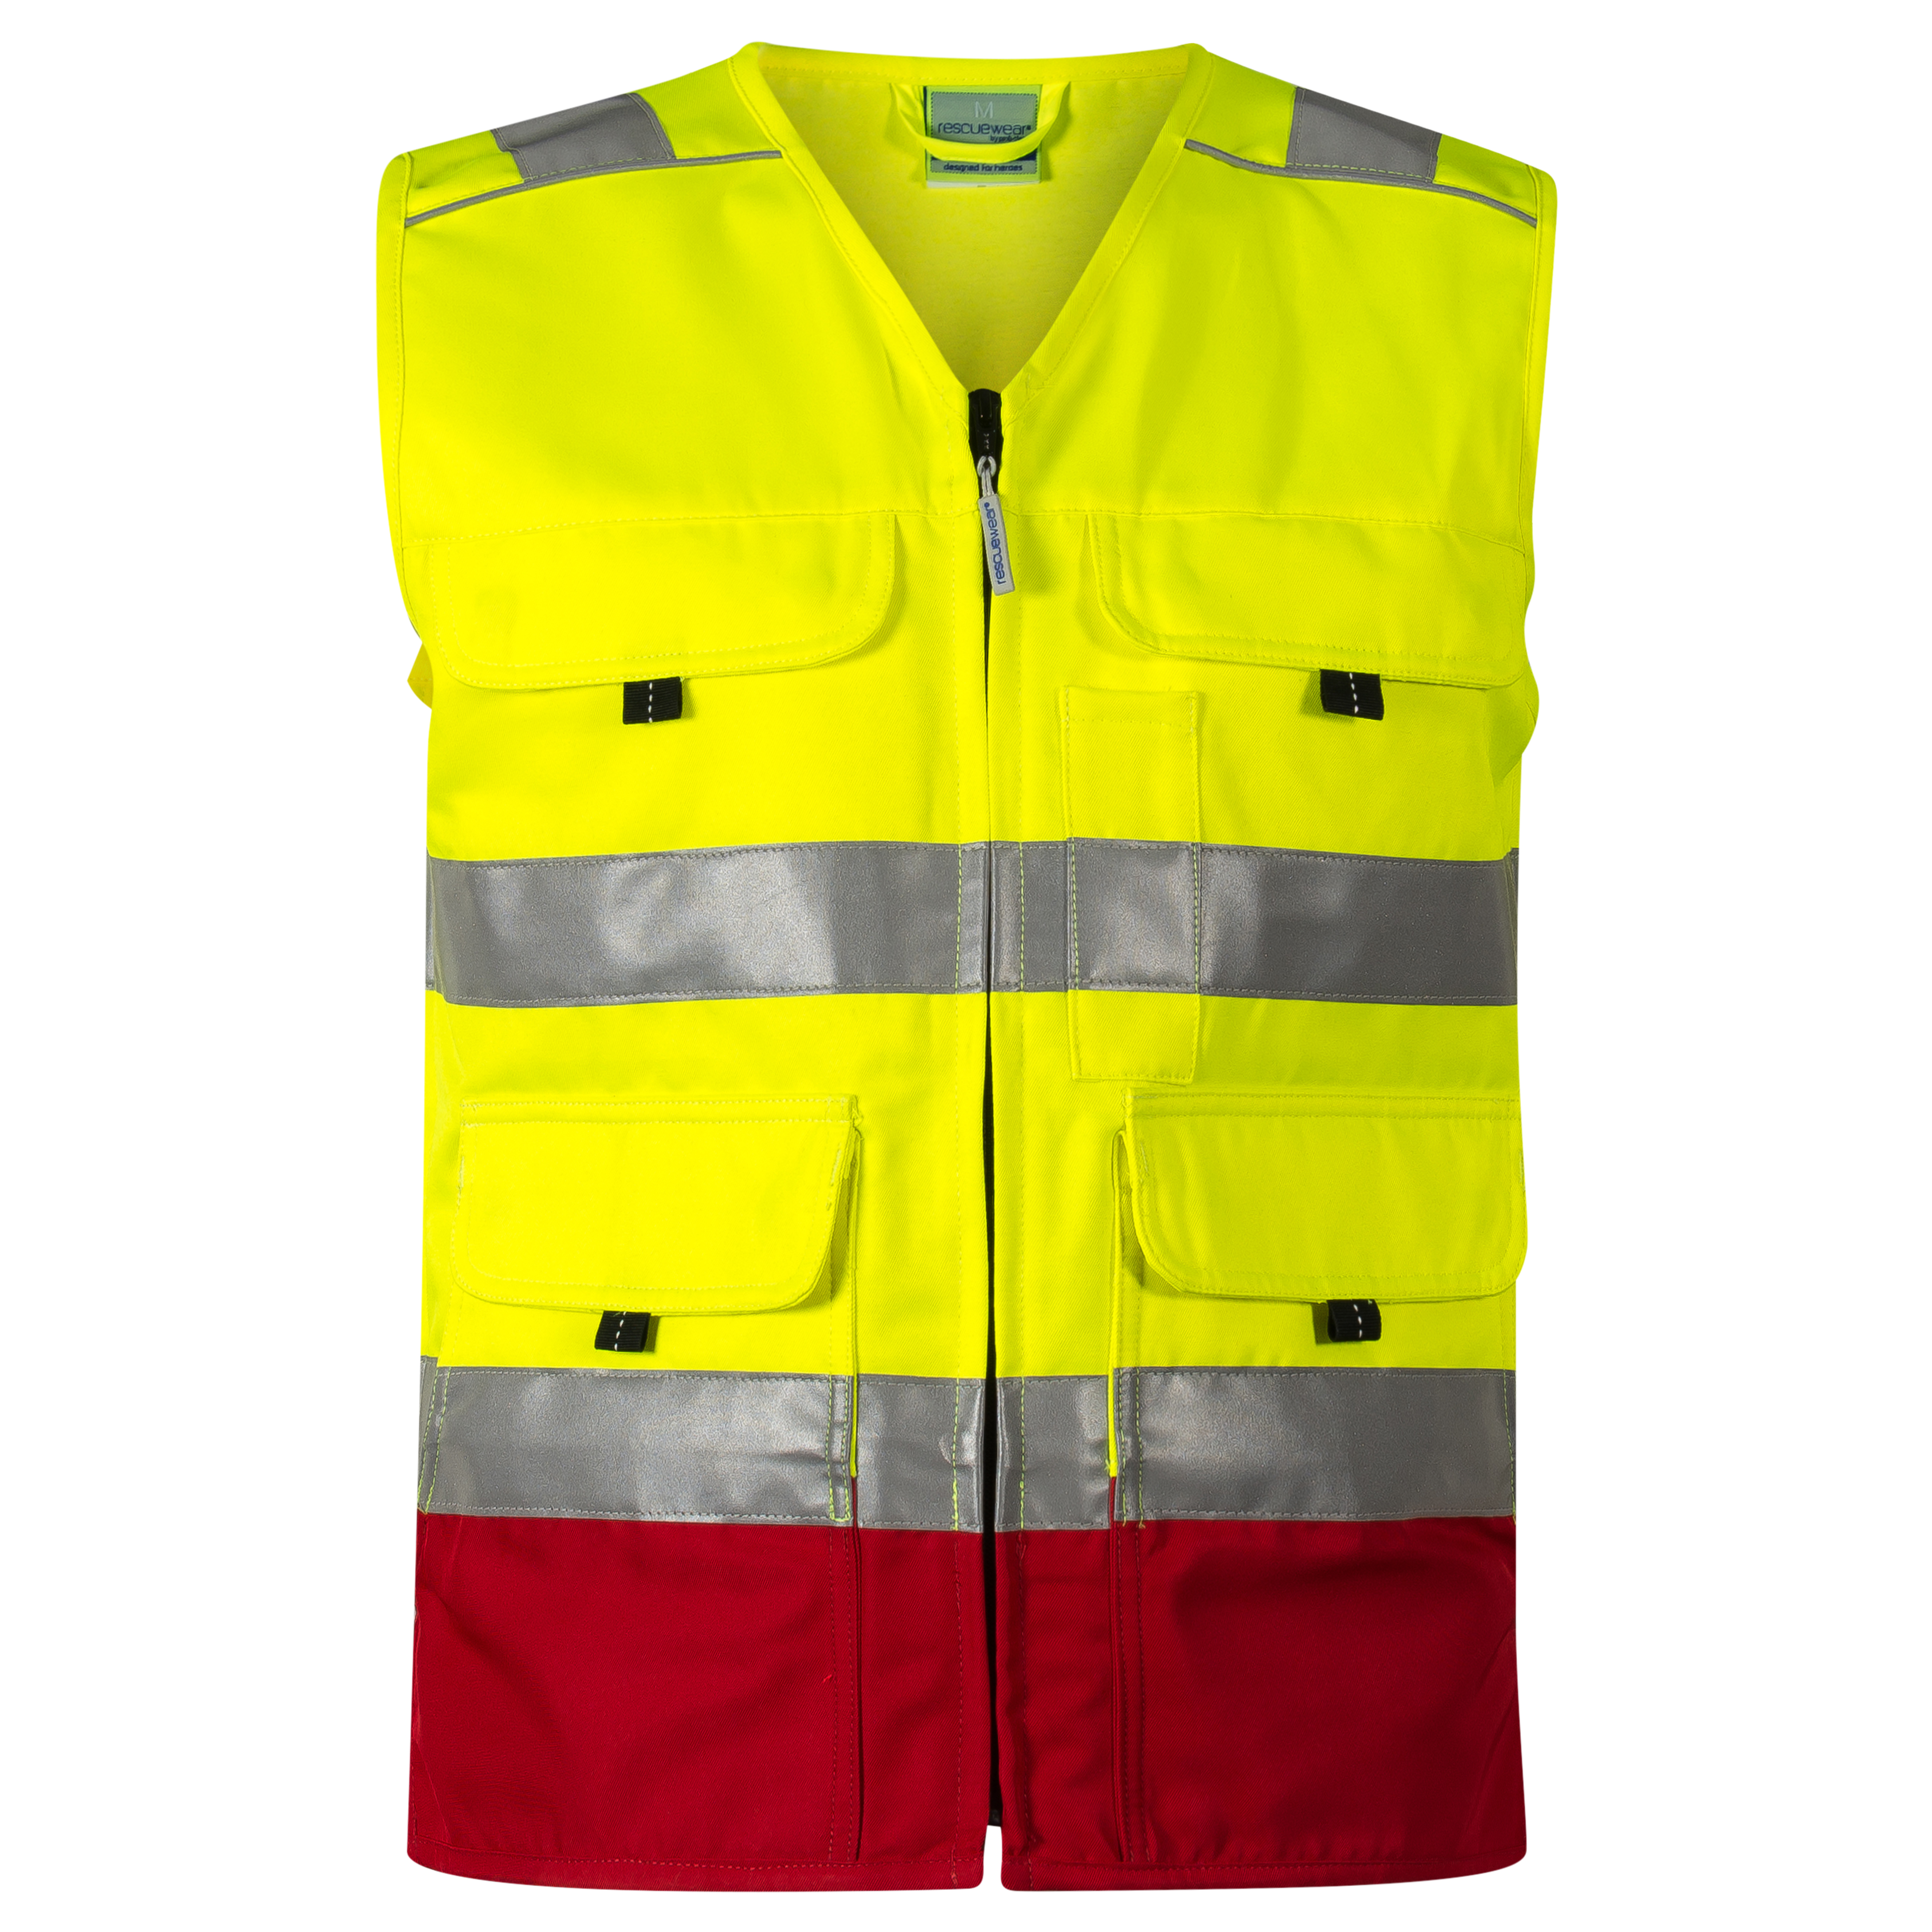 Rescuewear Sommerweste HiVis Klasse 1 Rot / Neon Gelb - XS